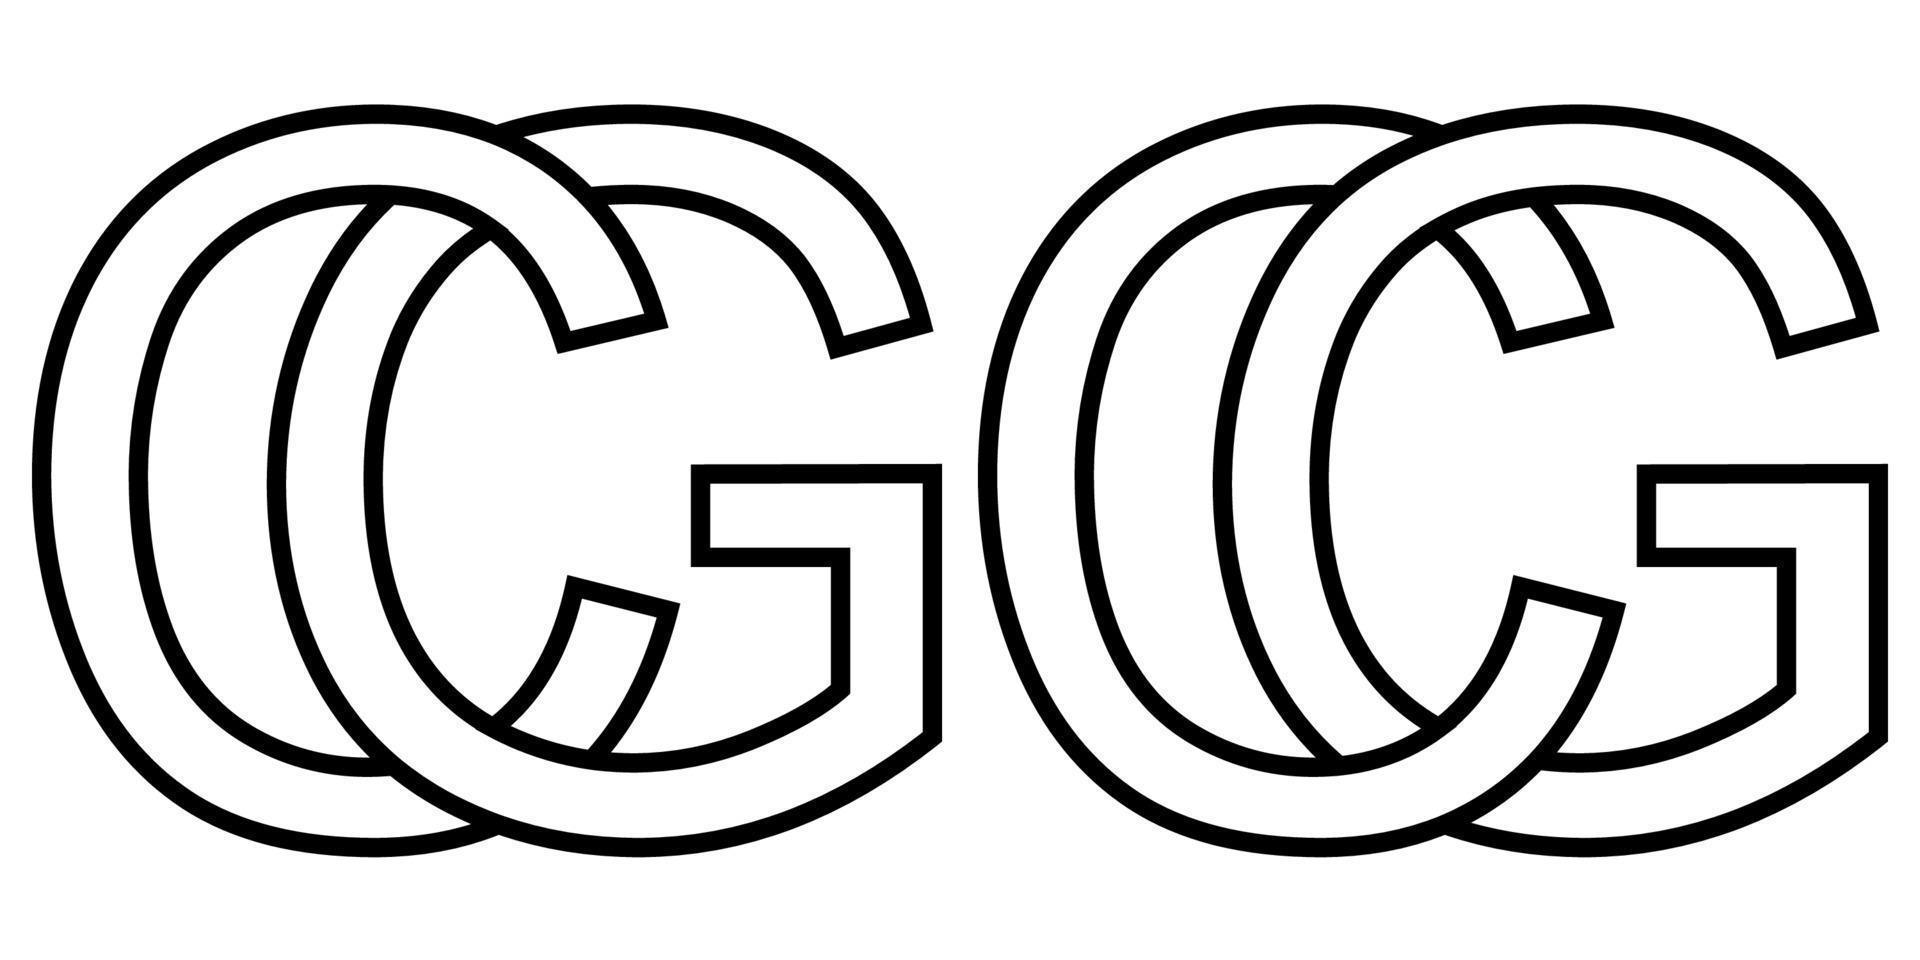 logotipo placa gc CG ícone placa dois entrelaçado cartas g, c vetor logotipo gc, CG primeiro capital cartas padronizar alfabeto g, c